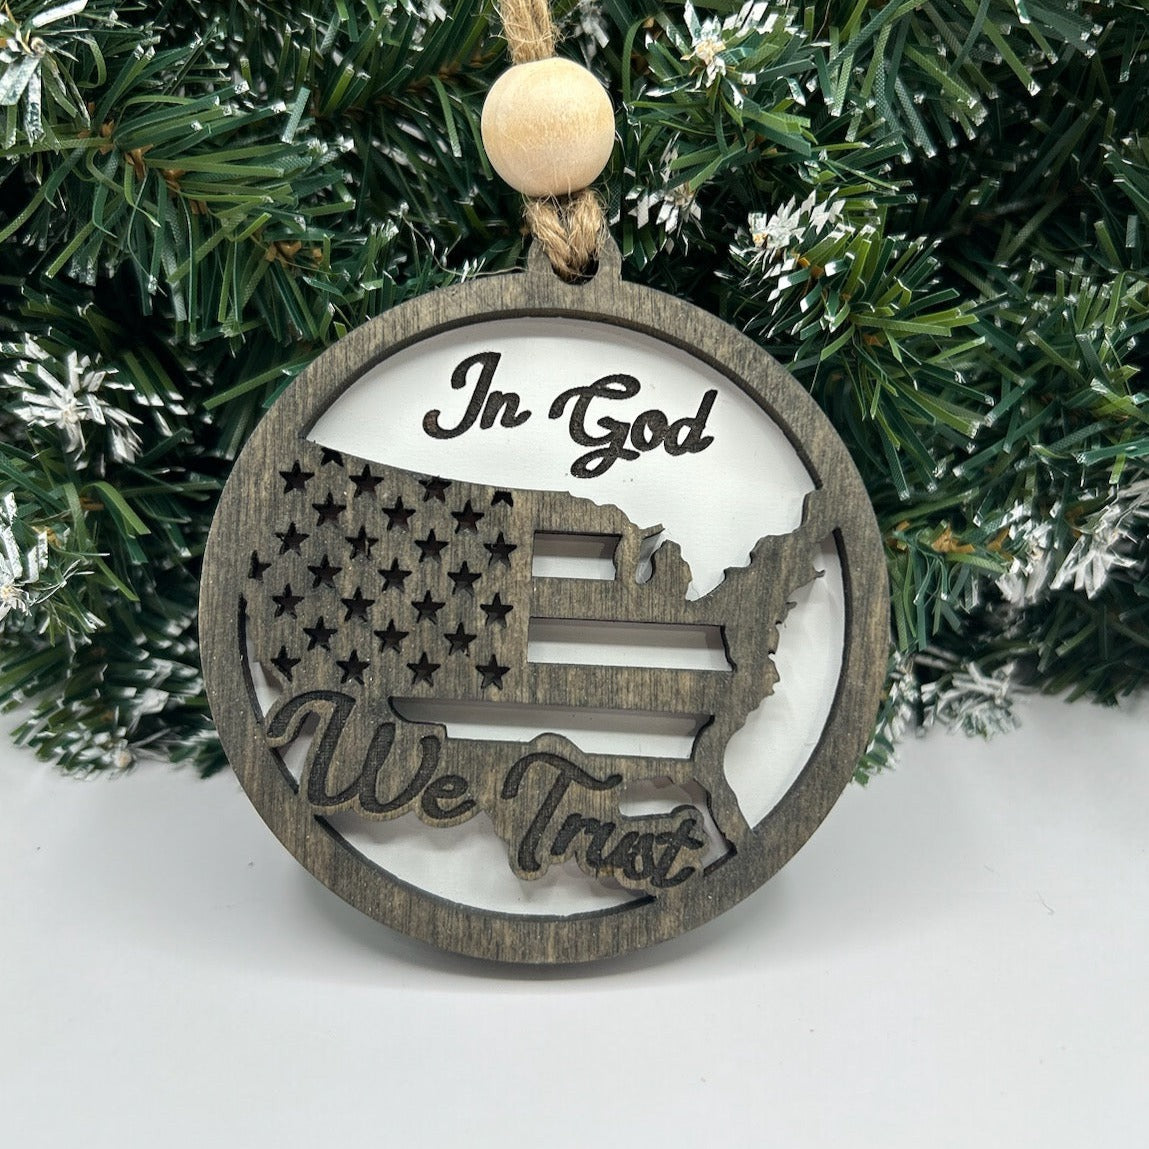 Patriotic wood ornament holiday tree decor